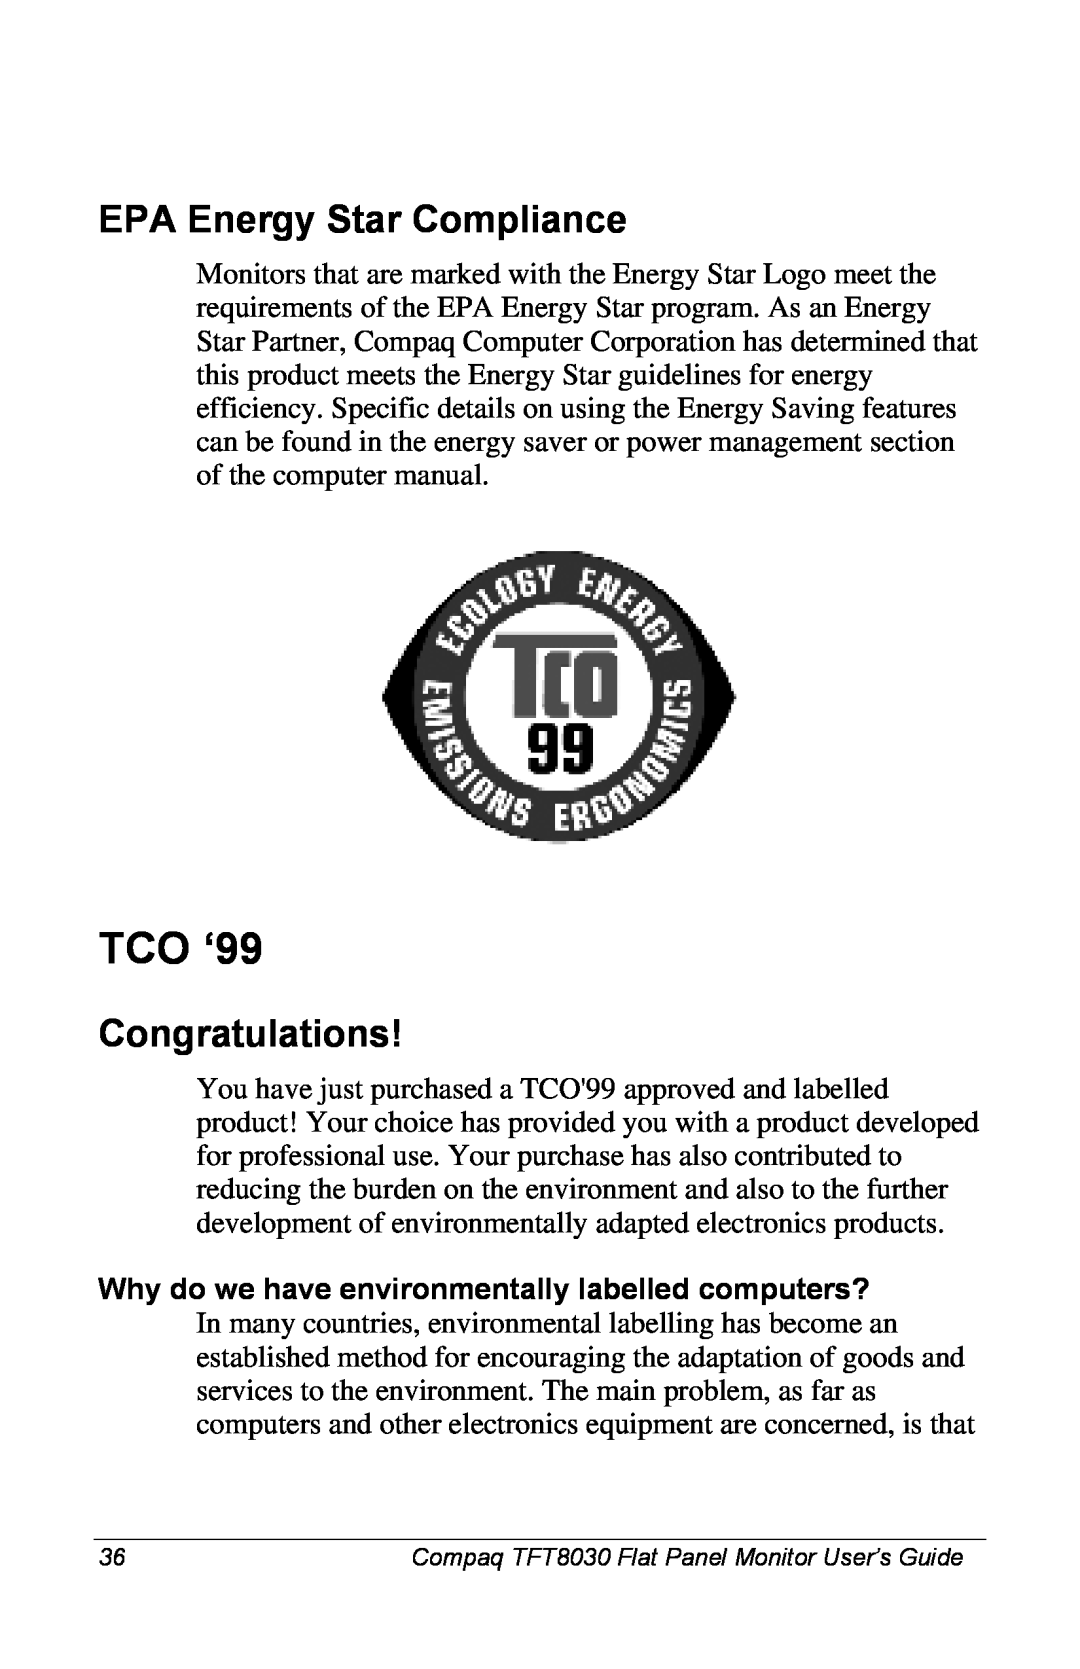 Compaq 8030 manual TCO ‘99, EPA Energy Star Compliance, Congratulations 